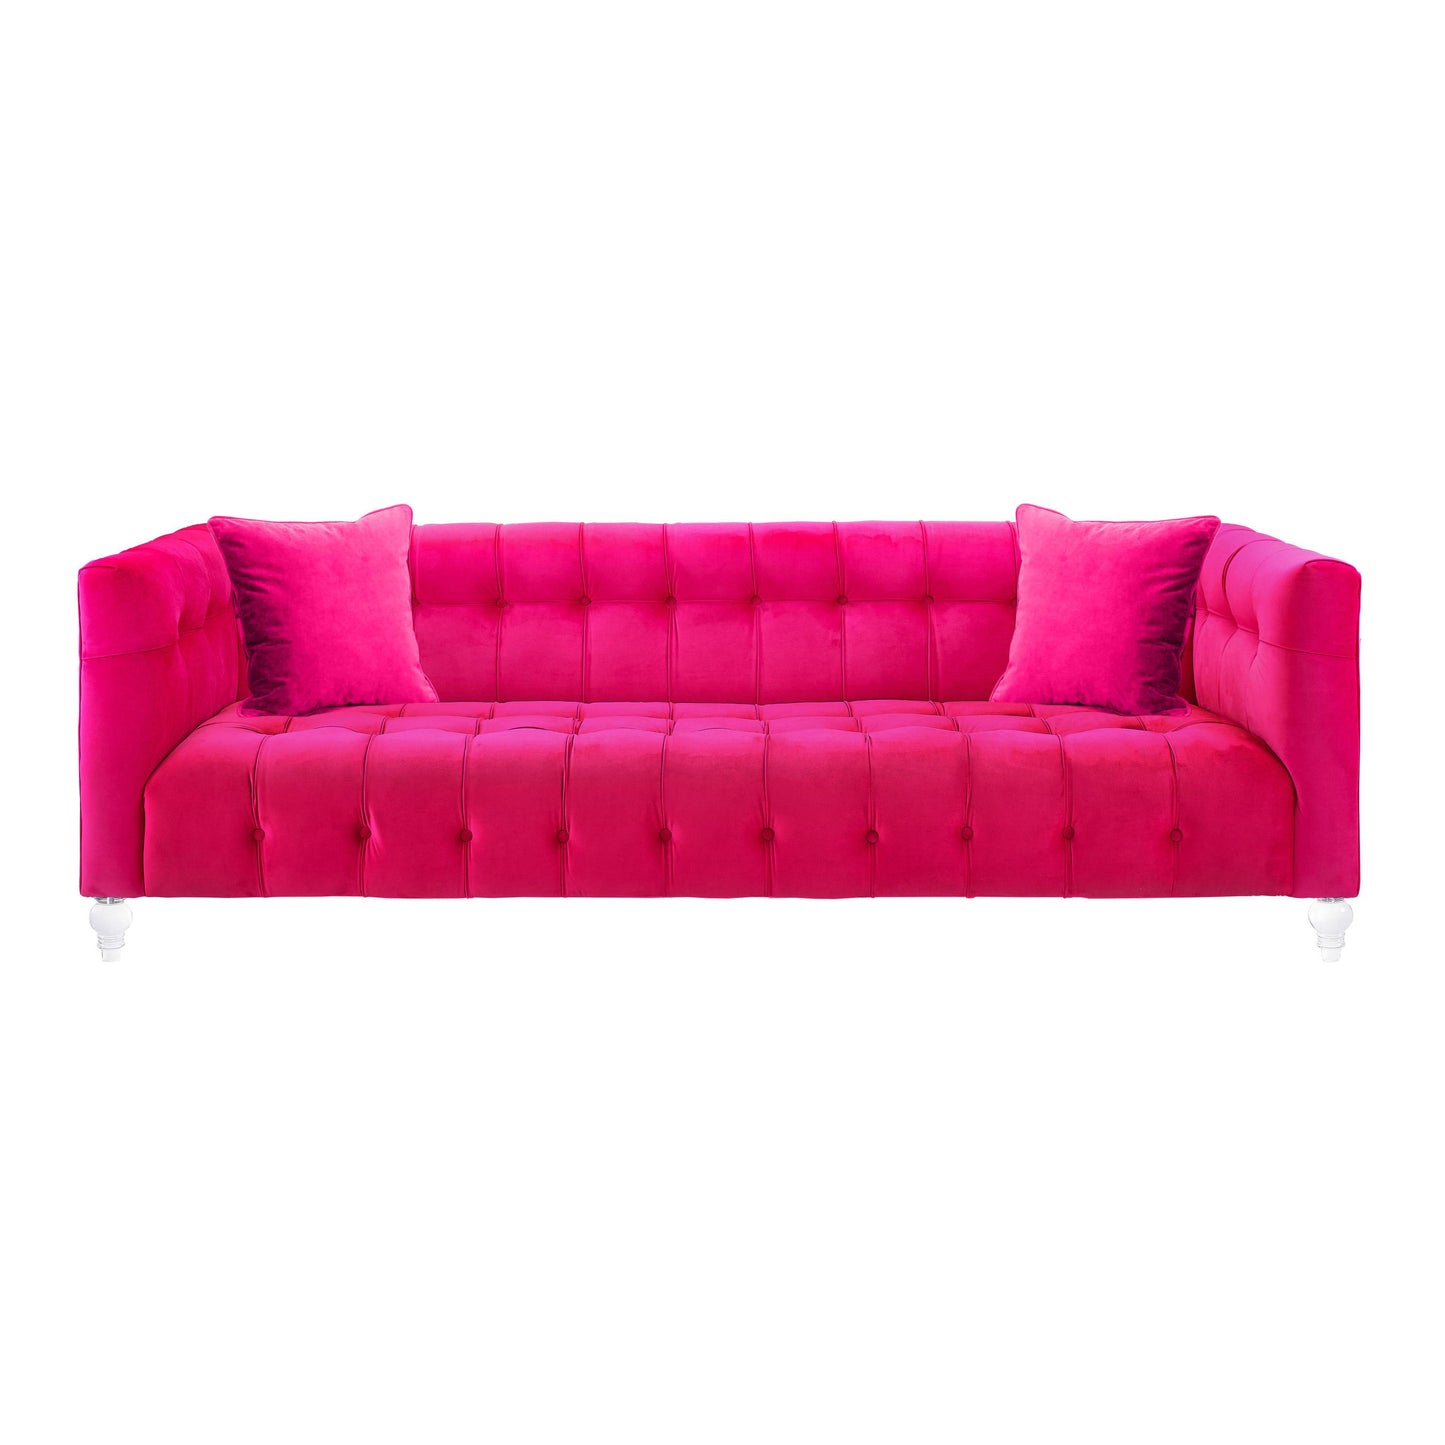 Tov Furniture Bea Hot Pink Velvet Sofa